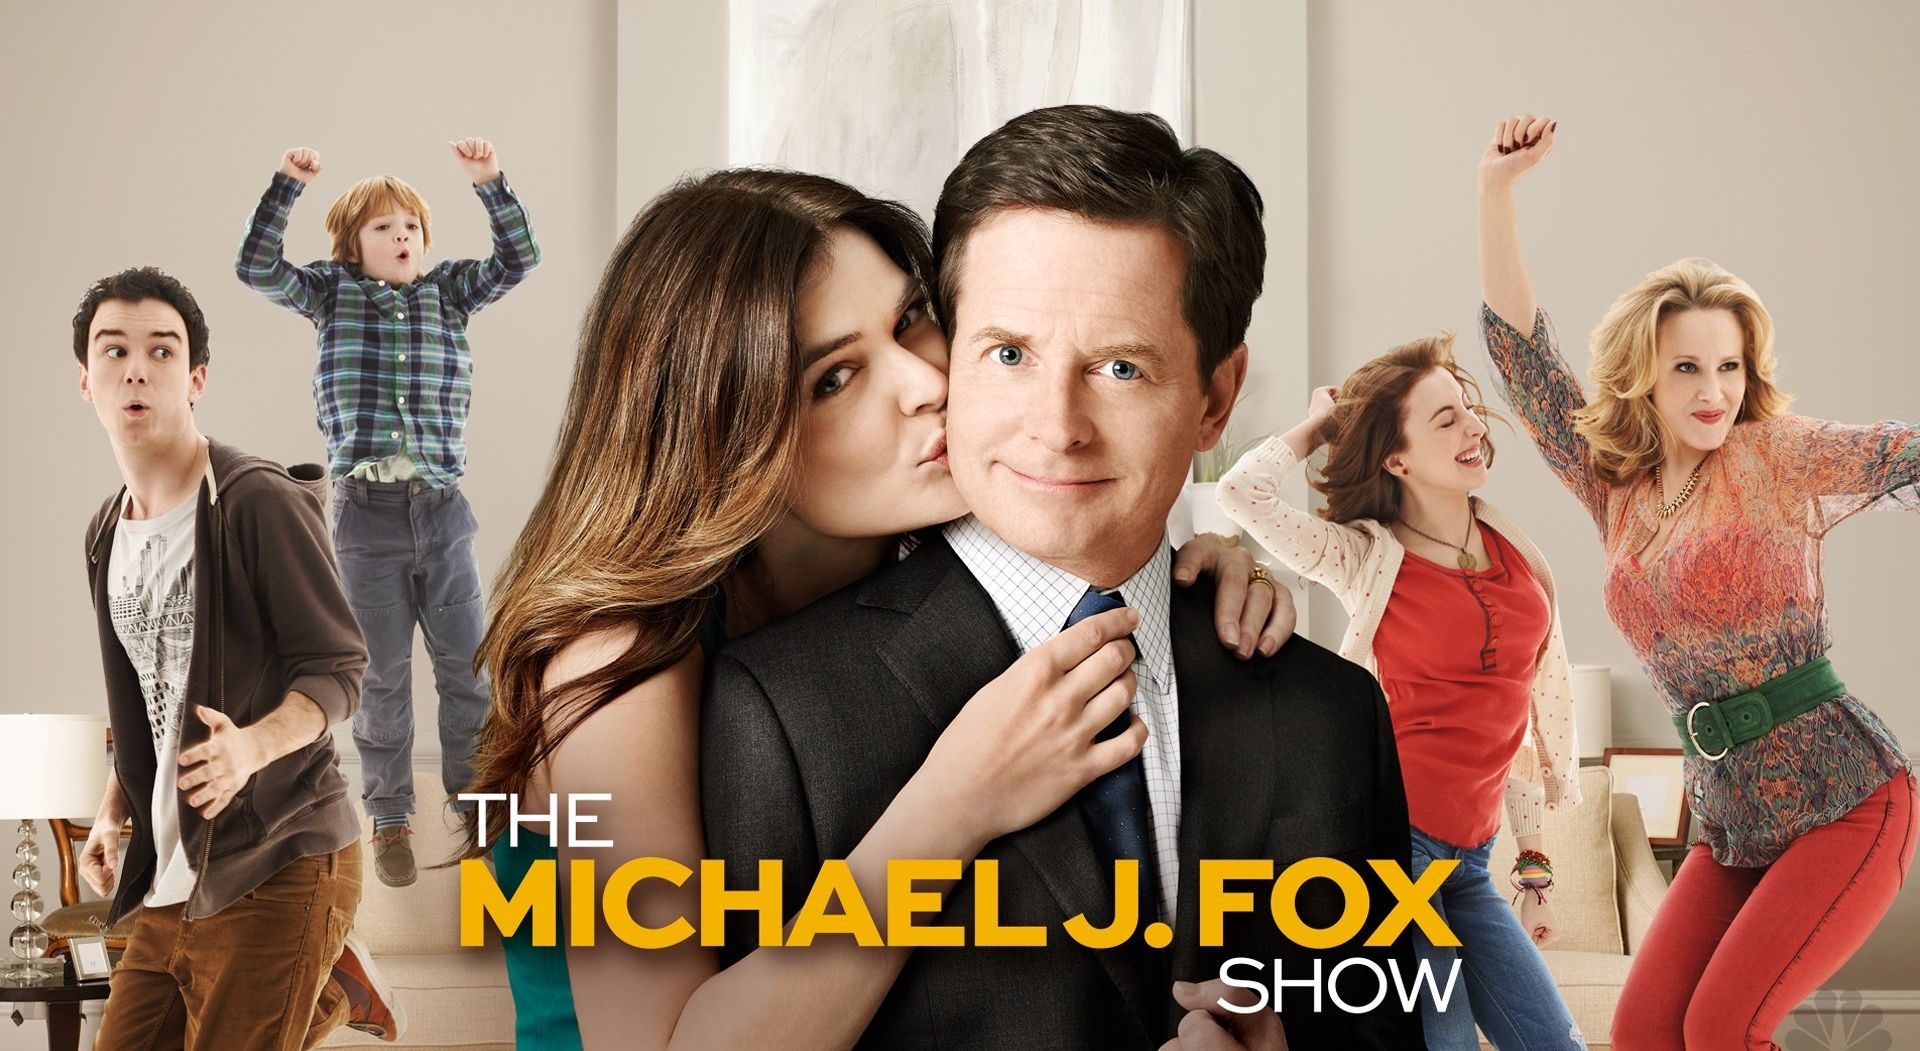 Family Values Tour: The Michael J Fox Show